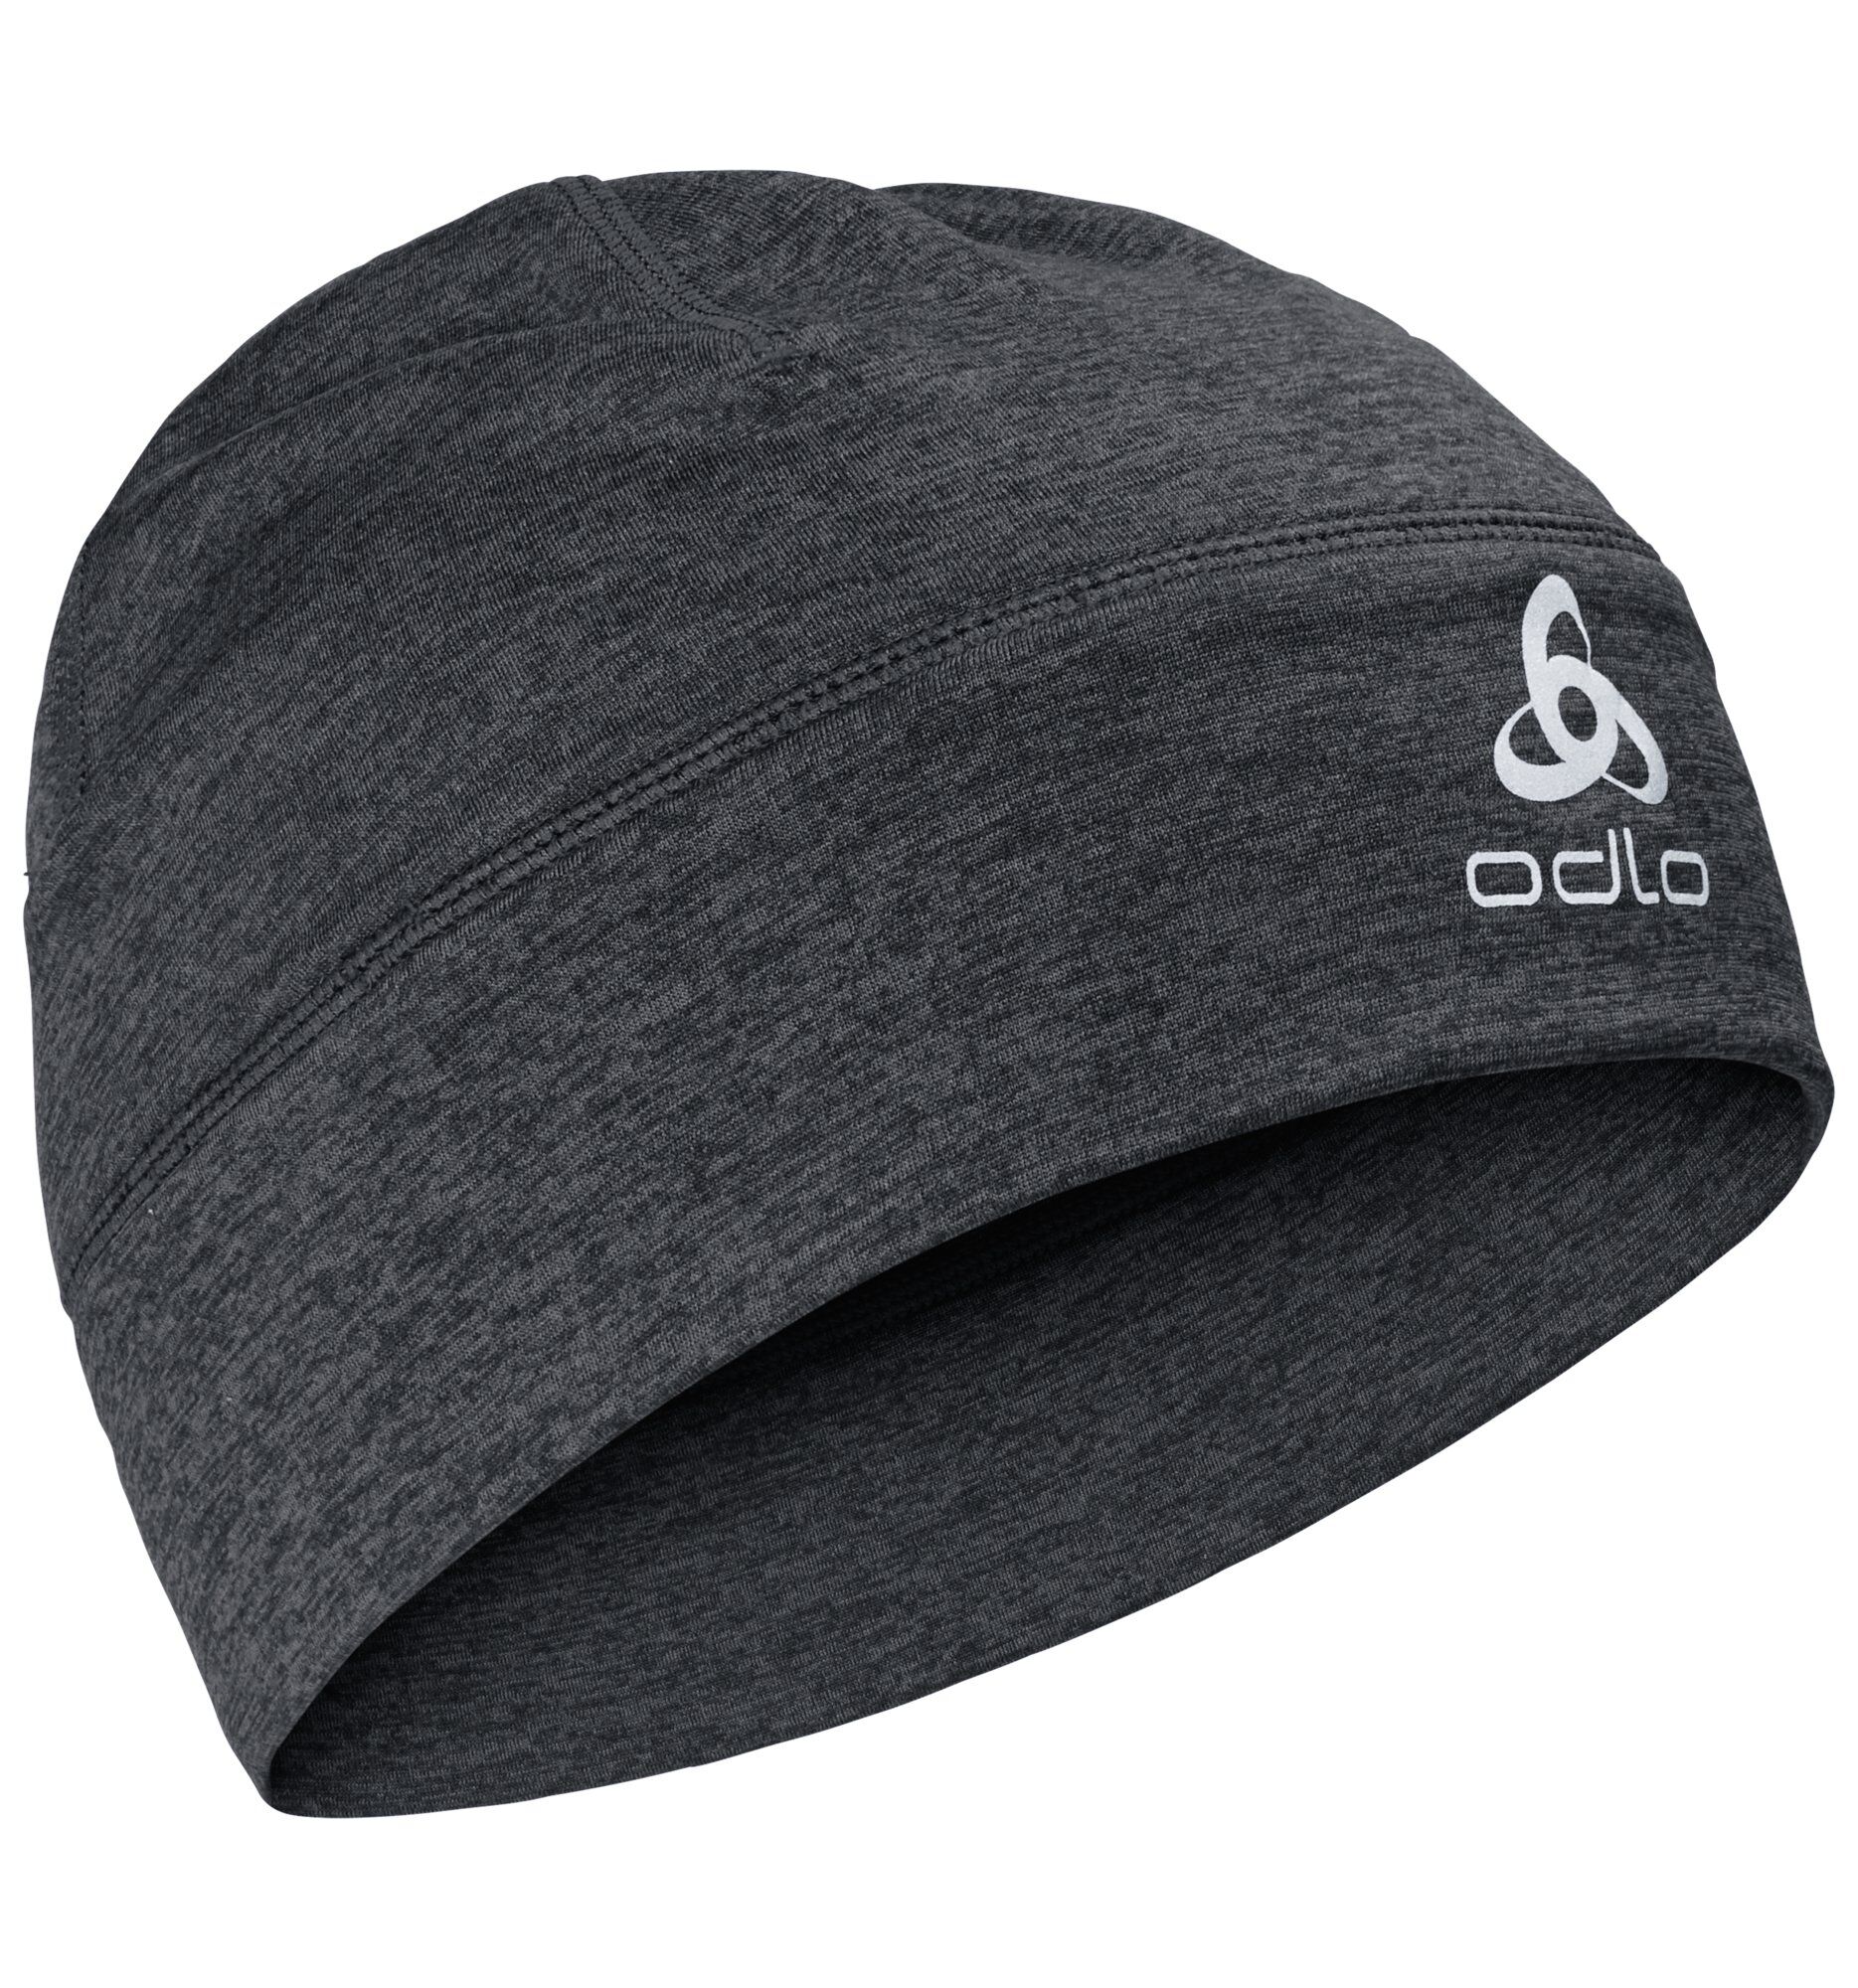 Odlo Millenium Hat - Mütze